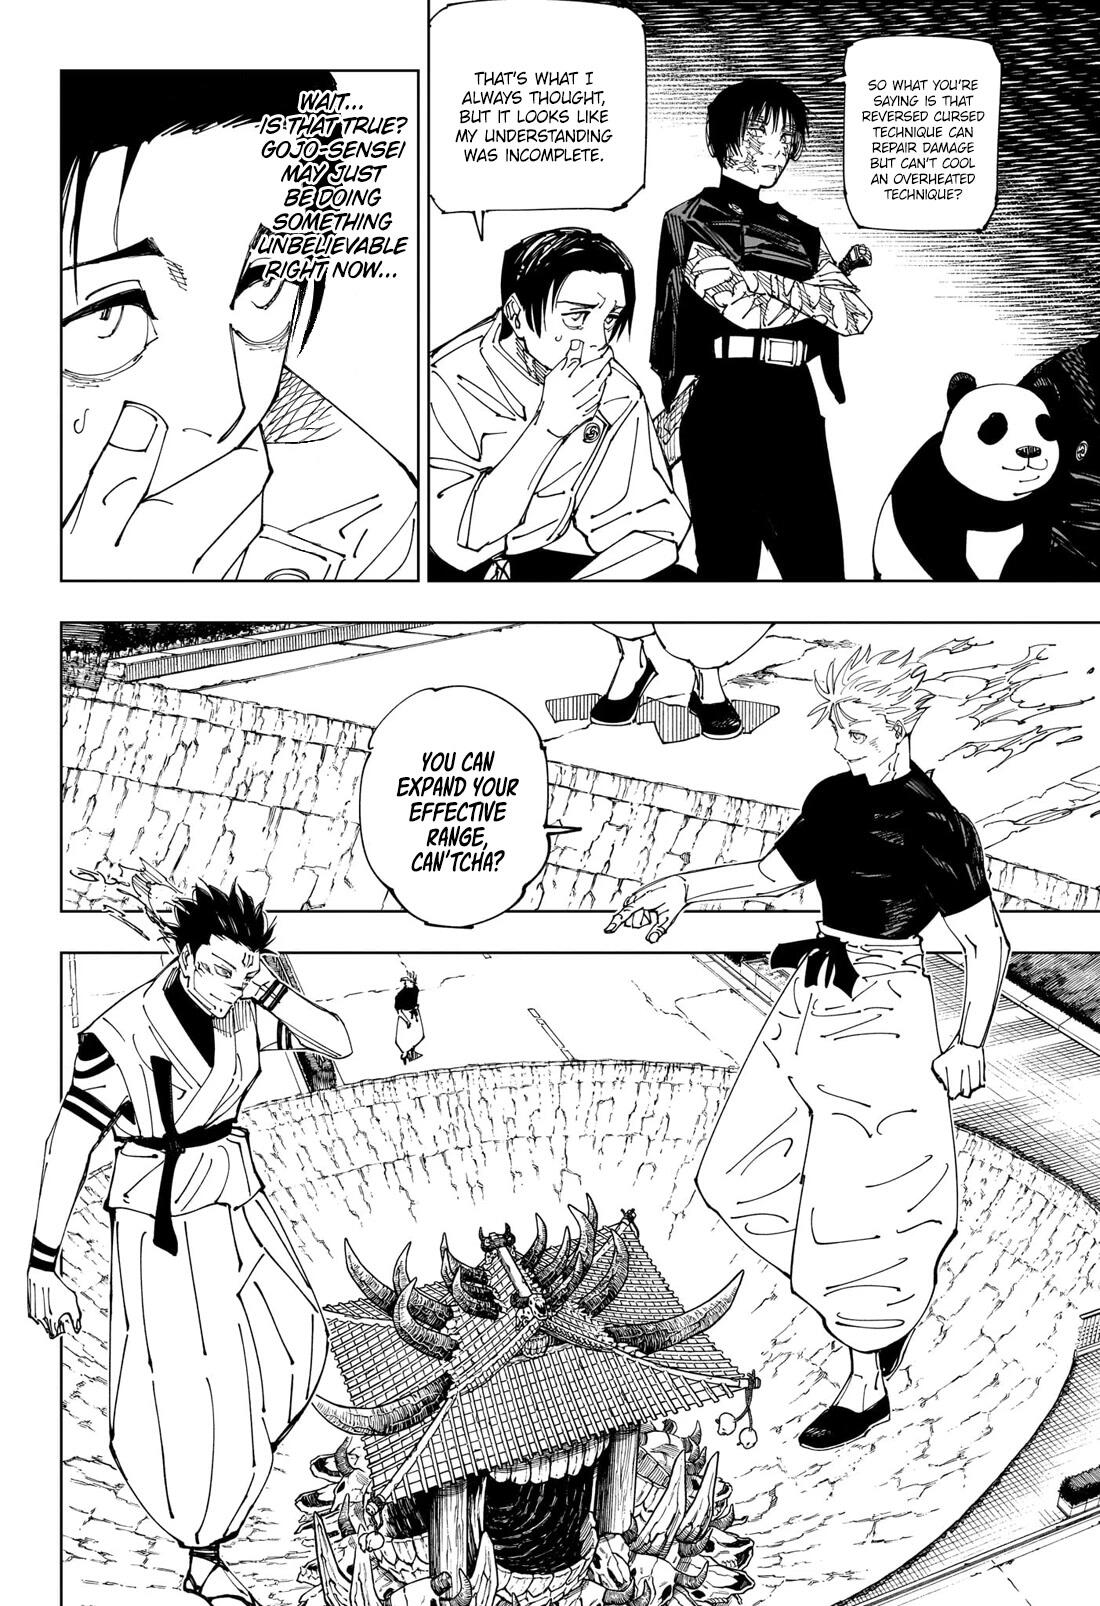 Jujutsu Kaisen Chapter 227: The Decisive Battle In The Uninhabited, Demon-Infested Shinjuku ⑤ page 5 - Mangakakalot